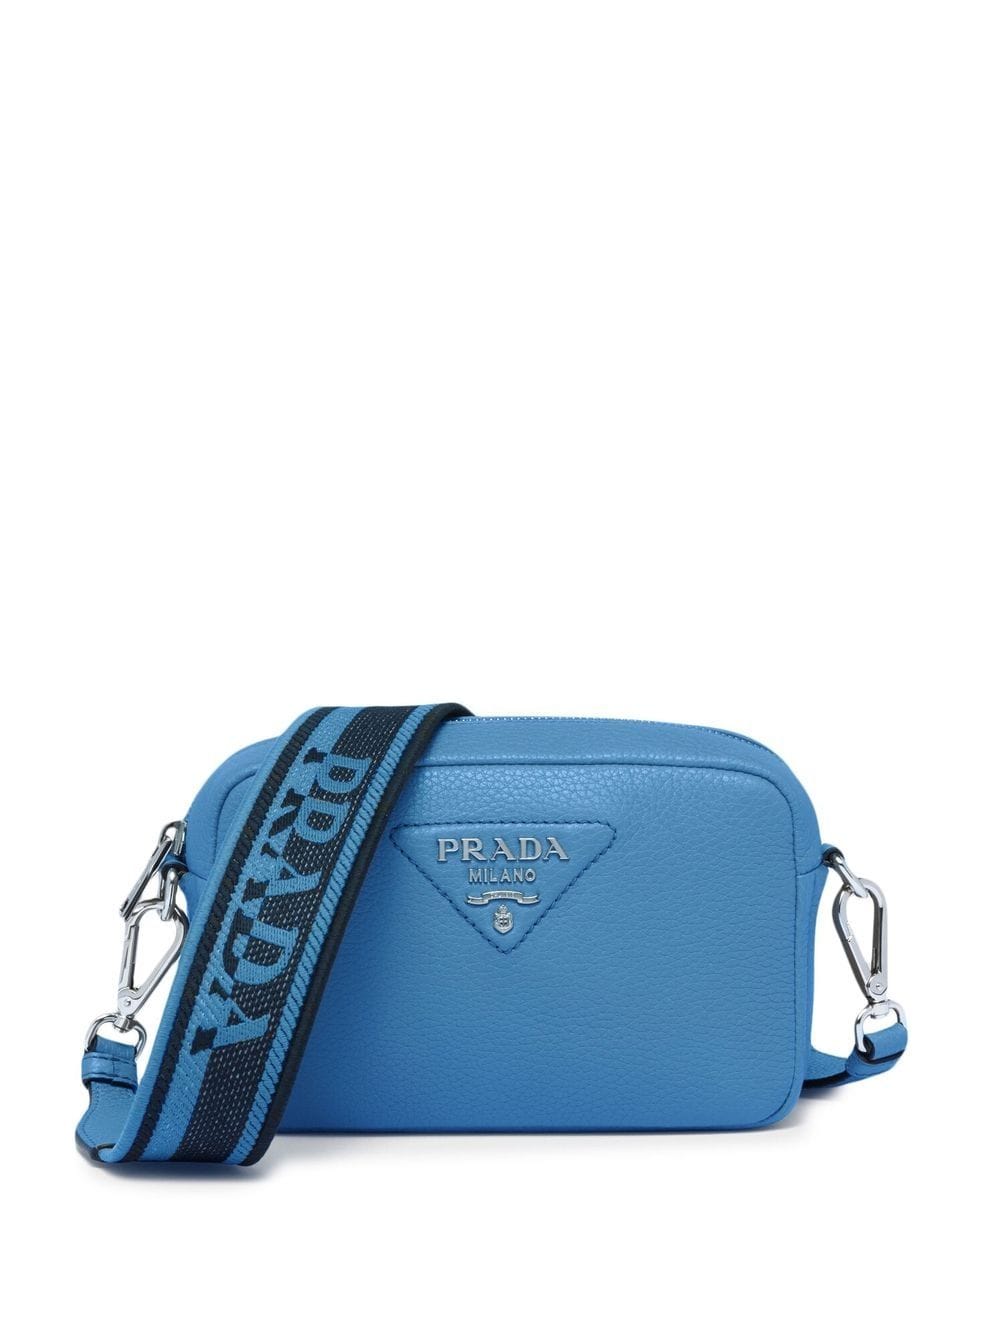 Prada small leather crossbody bag - Blue von Prada